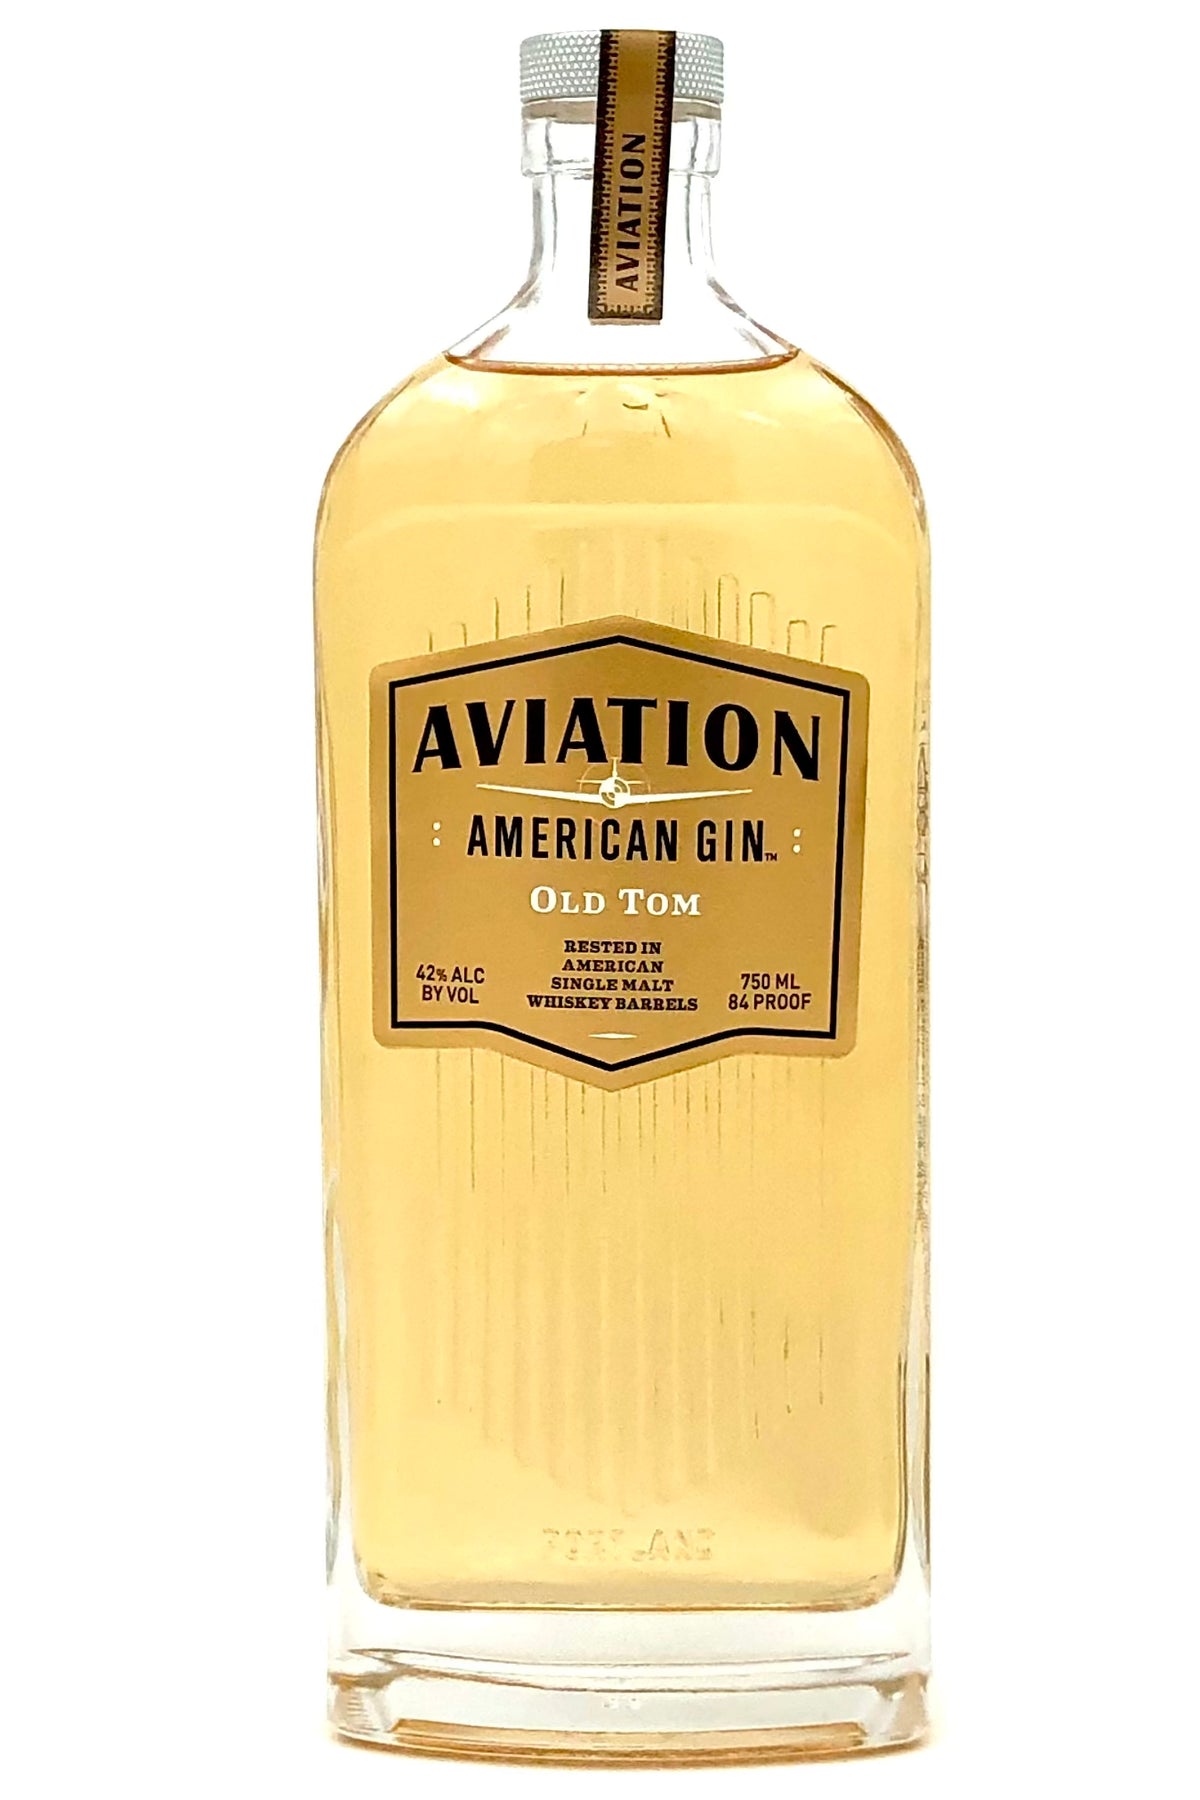 Aviation Old Tom Gin